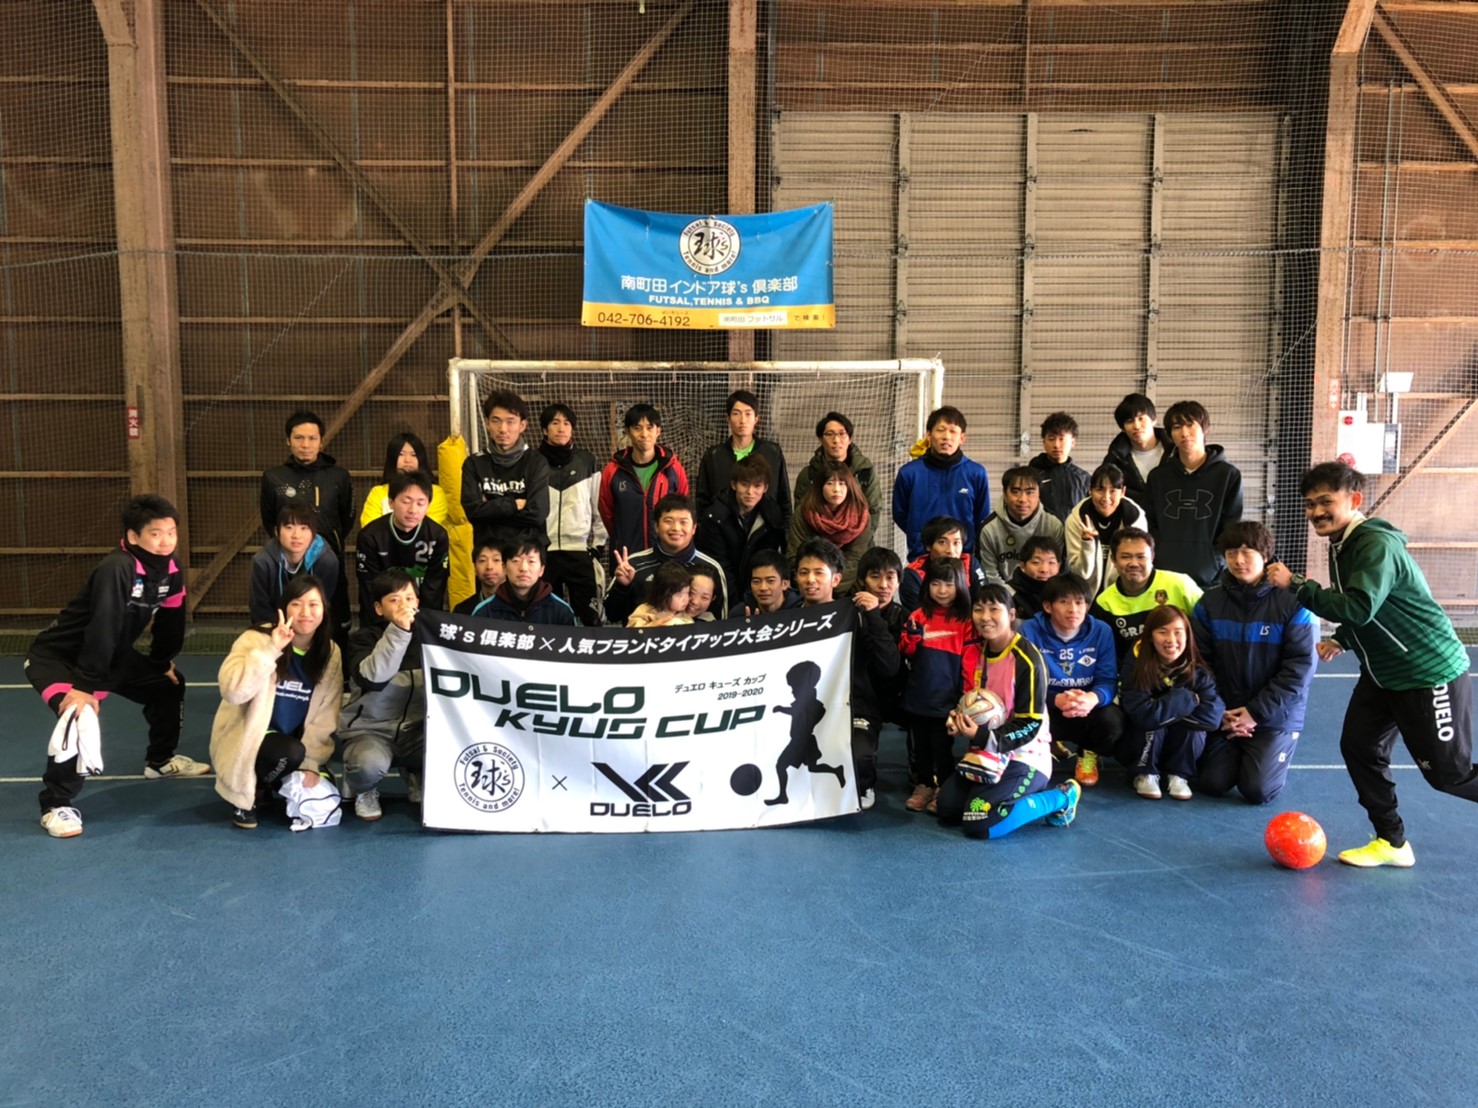 Duelo Kyus Cup 19 南町田 Mix1 開催しました 南町田インドア球 S倶楽部フットサル テニス q